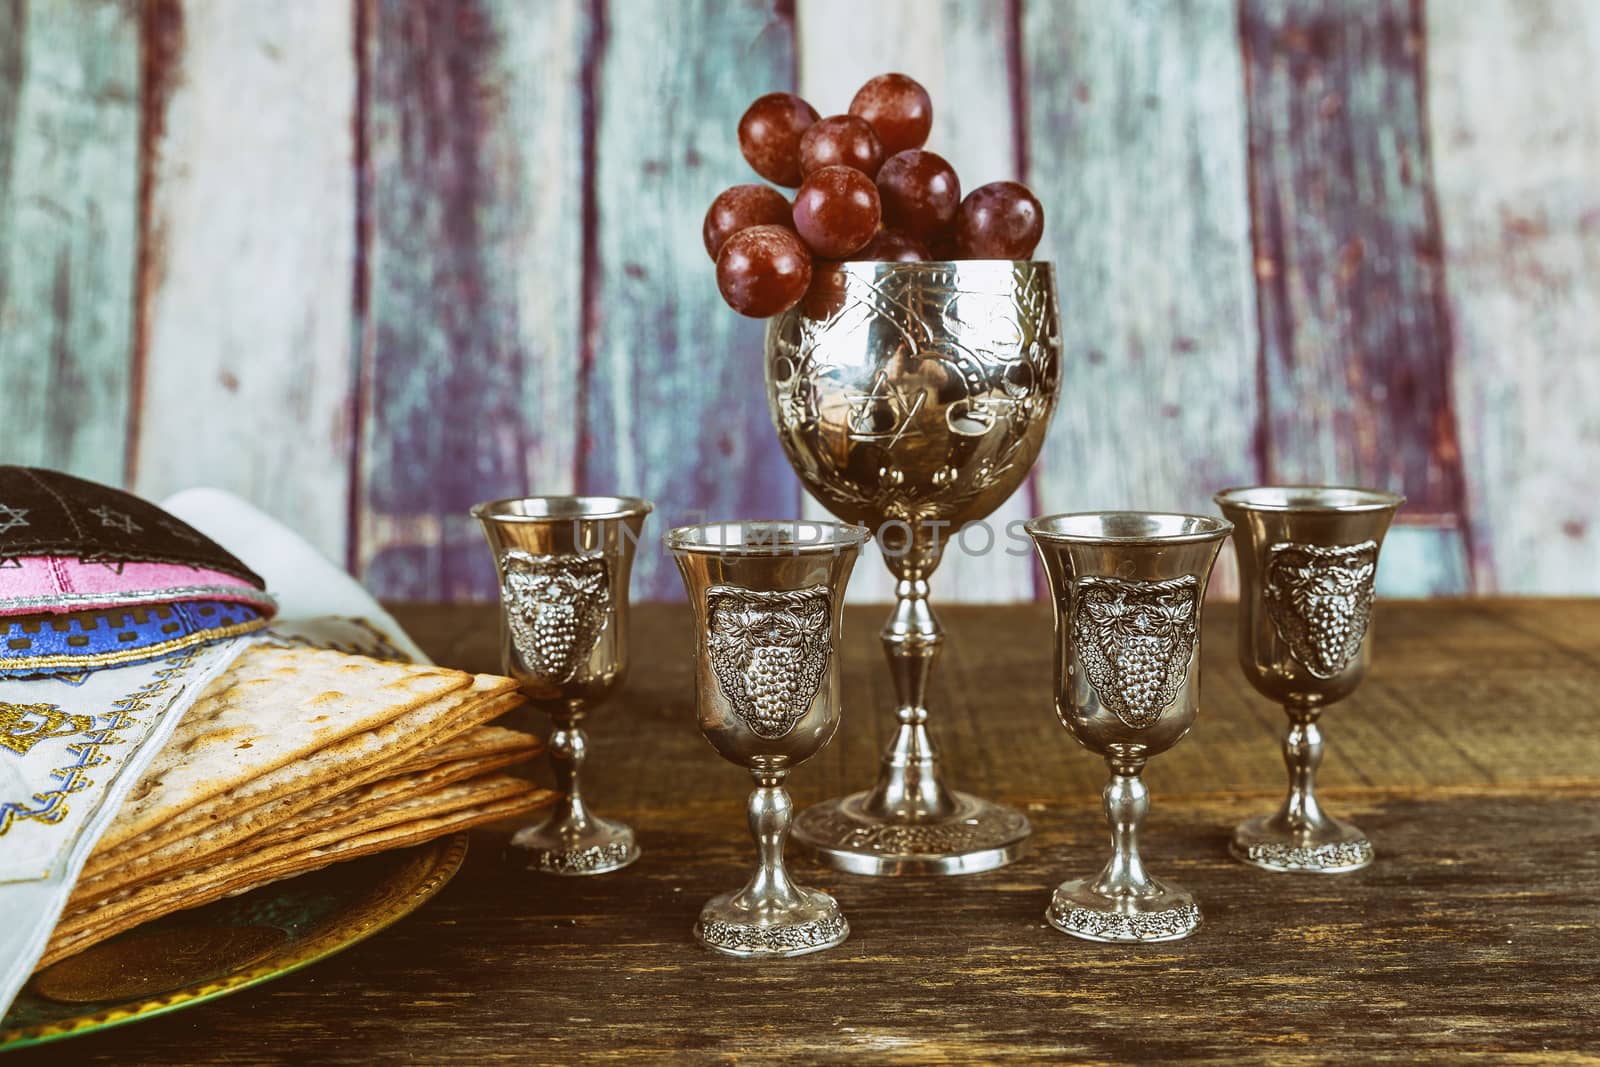 Jewish holiday Passover with matzah, pesah celebration four cup kosher wine